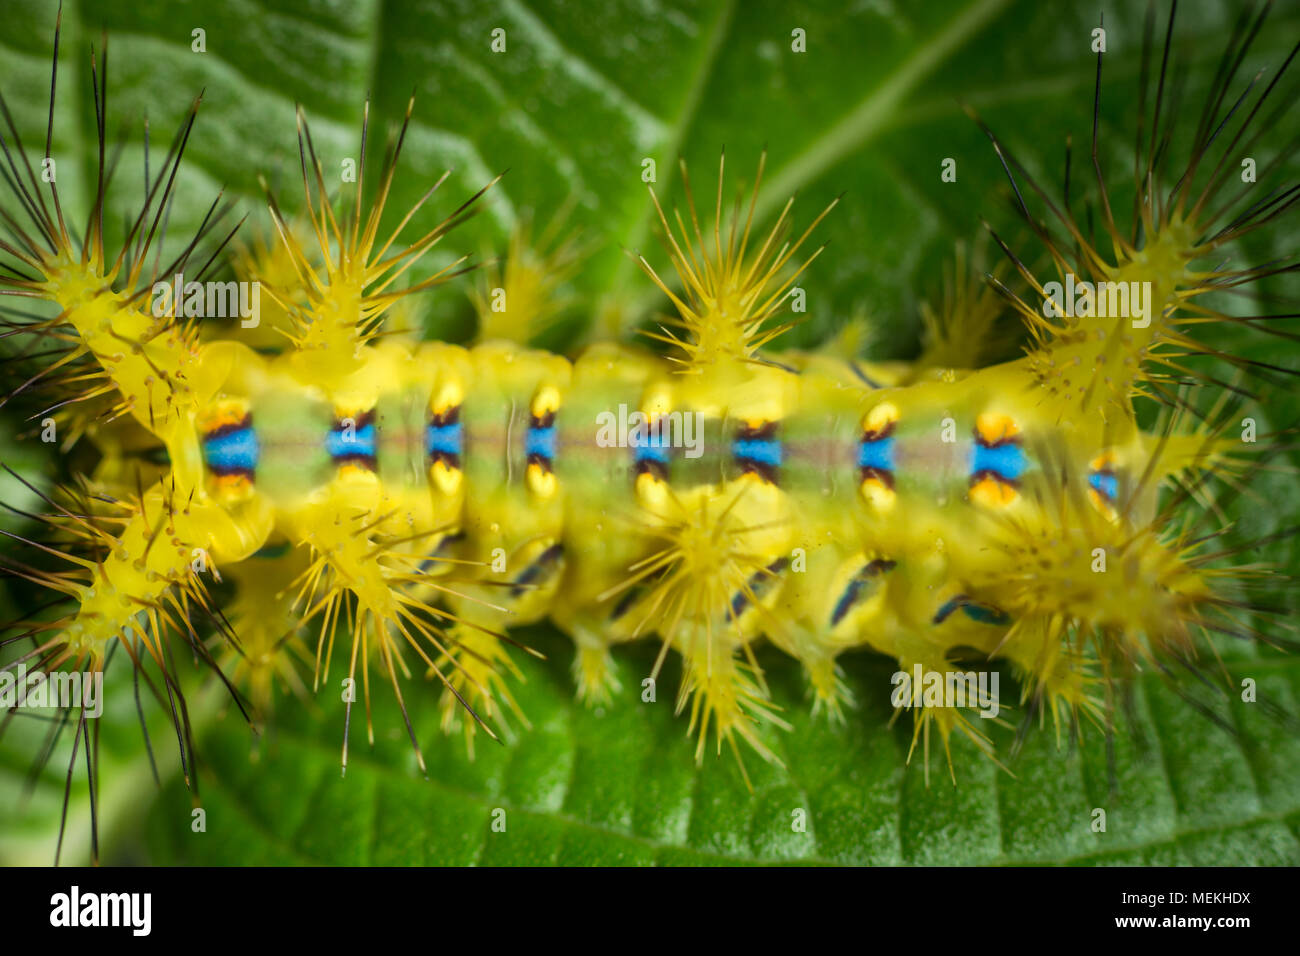 Setora nitens caterpillar or the Stinging Nettle Slug Caterpillar. An extreme macro photography close-up of an extravagant and beautiful caterpillar Stock Photo